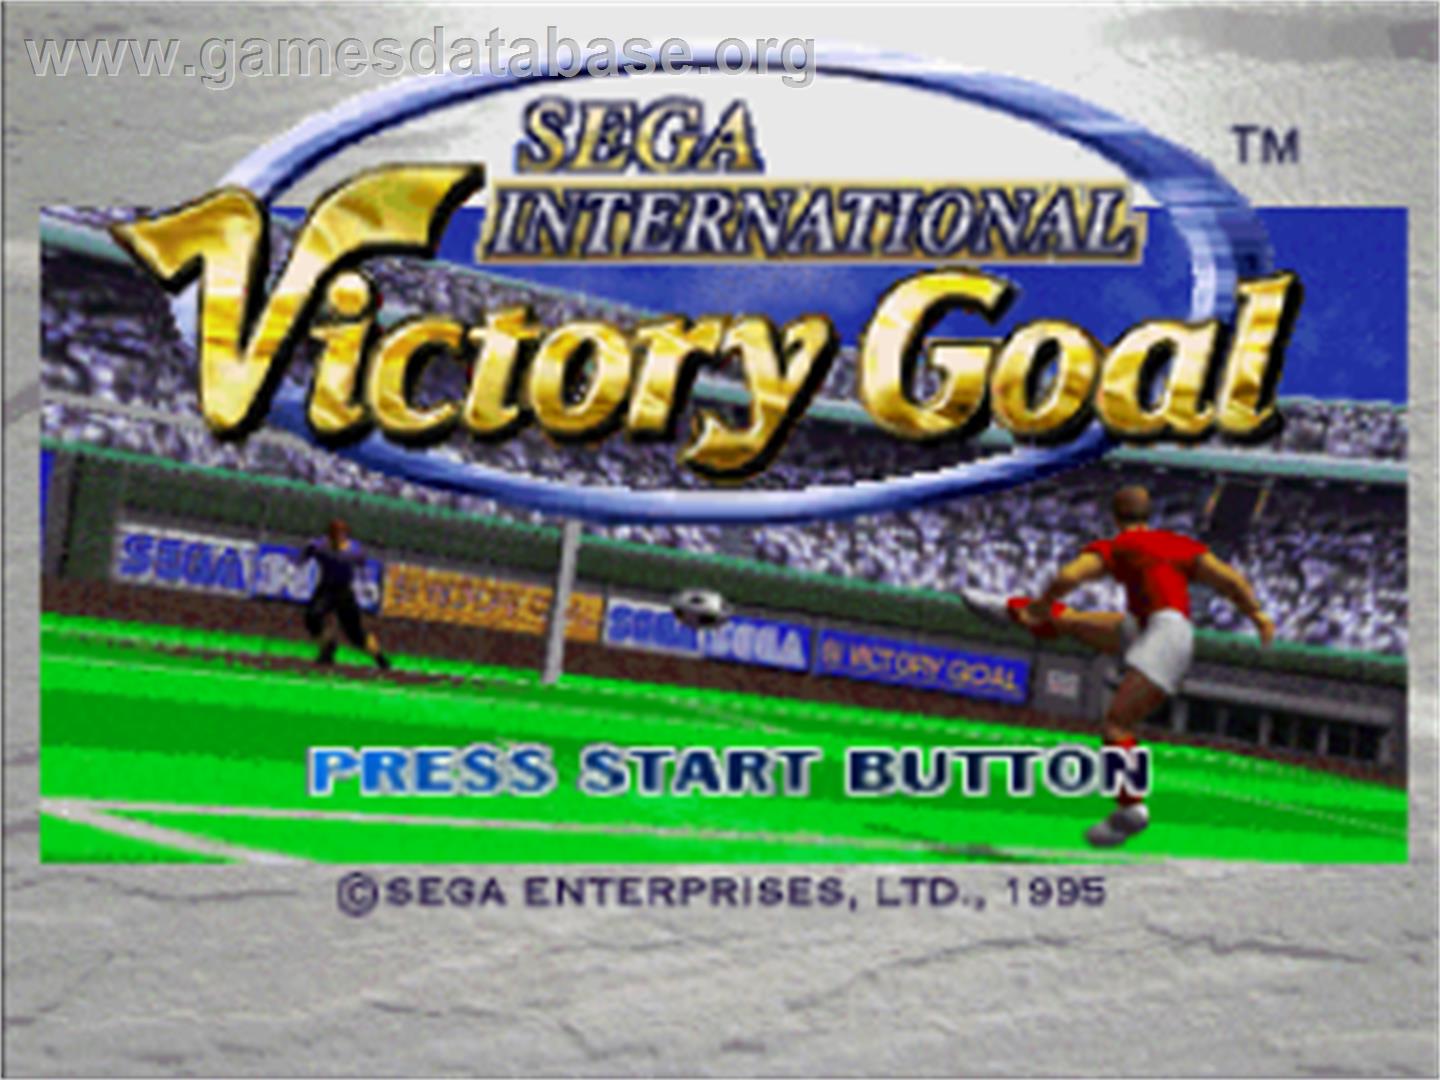 Worldwide Soccer: Sega International Victory Goal Edition - Sega Saturn - Artwork - Title Screen